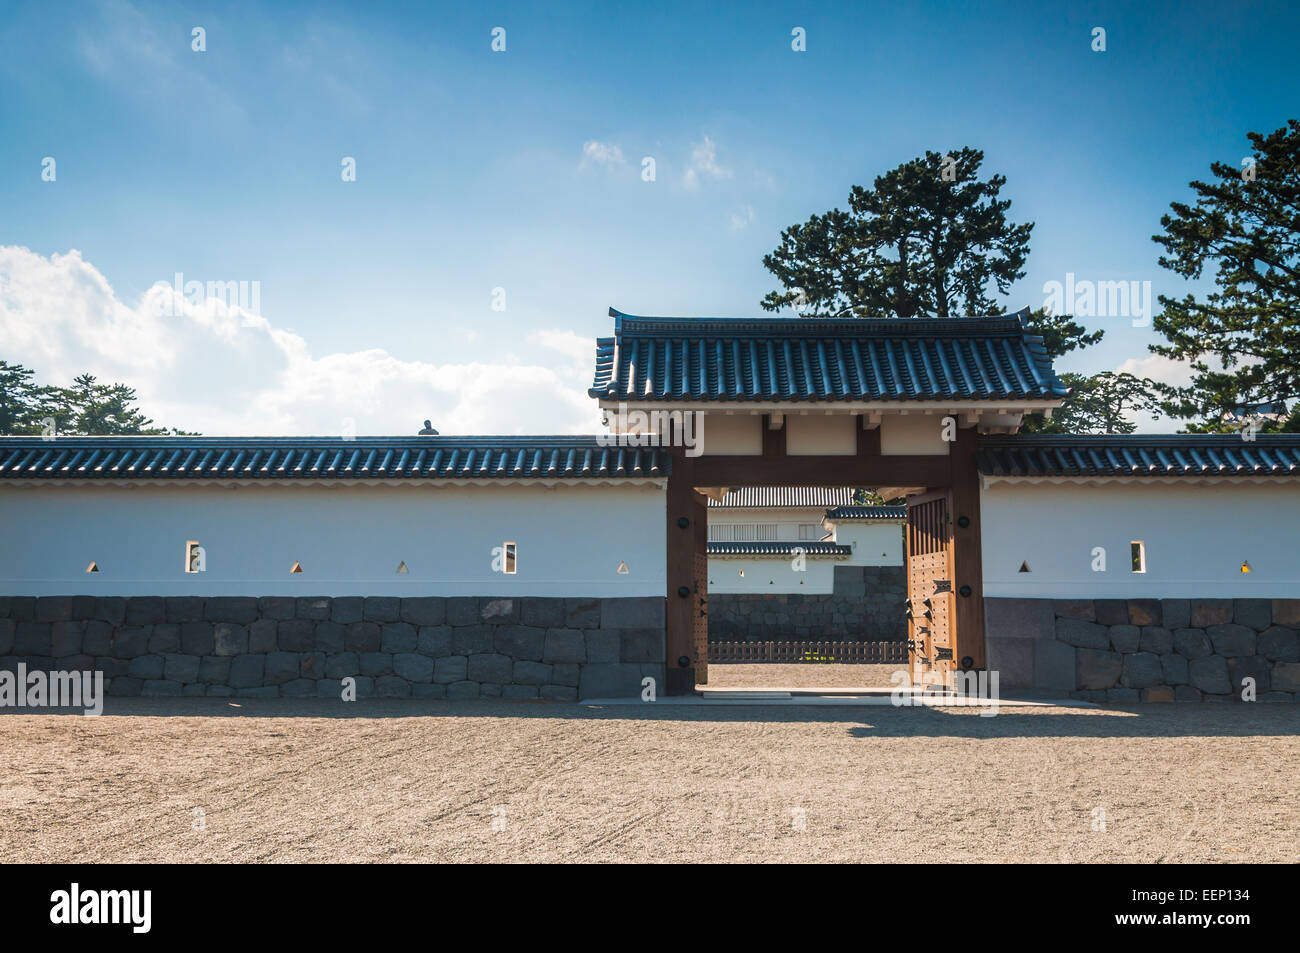 Traditional Japanese architecture at Odawara Castle in Odawara, Japan. Stock Photo